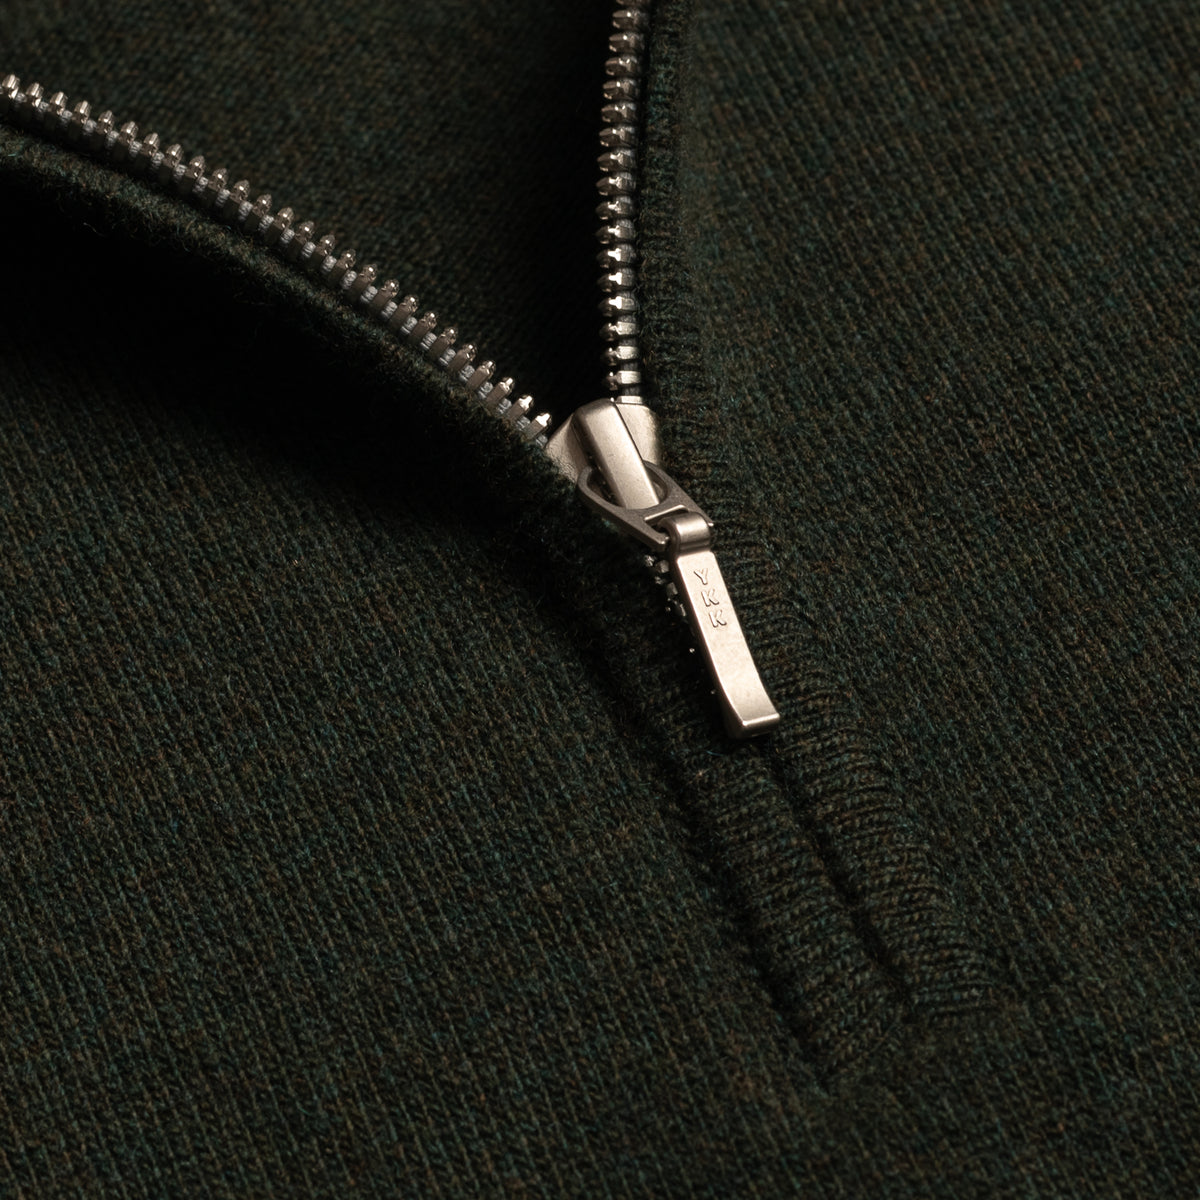 Dark Fern Wool/Cashmere Keswick Quarter Zip